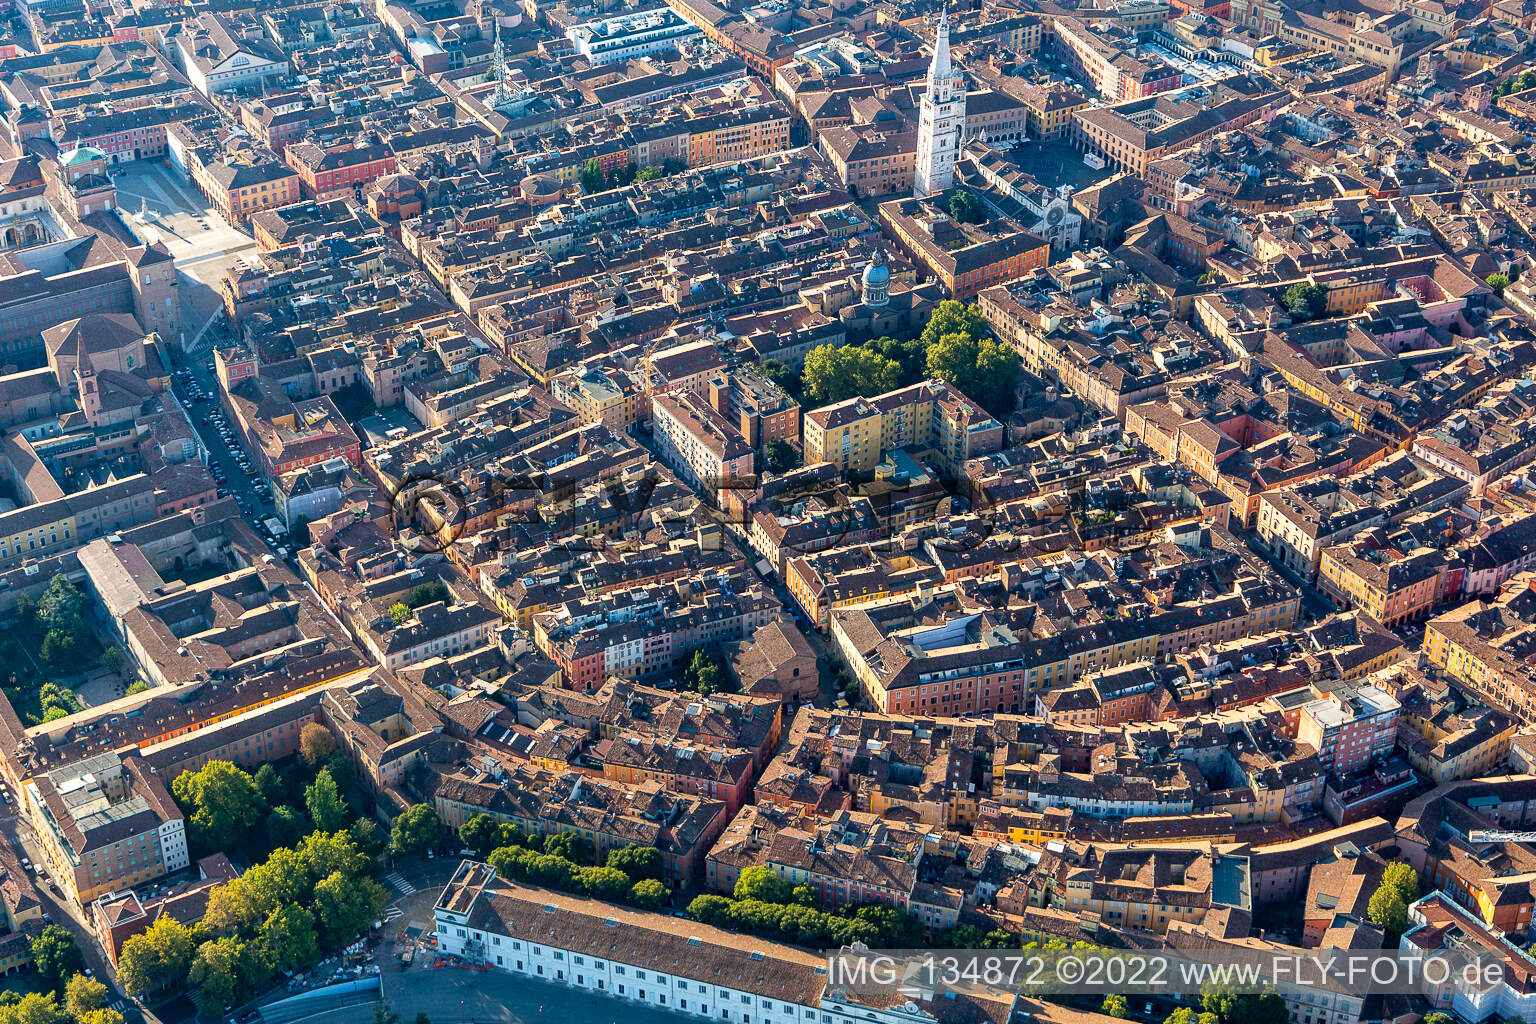 Luftbild von Kathedrale Von Modena Duomo di Modena, Italien